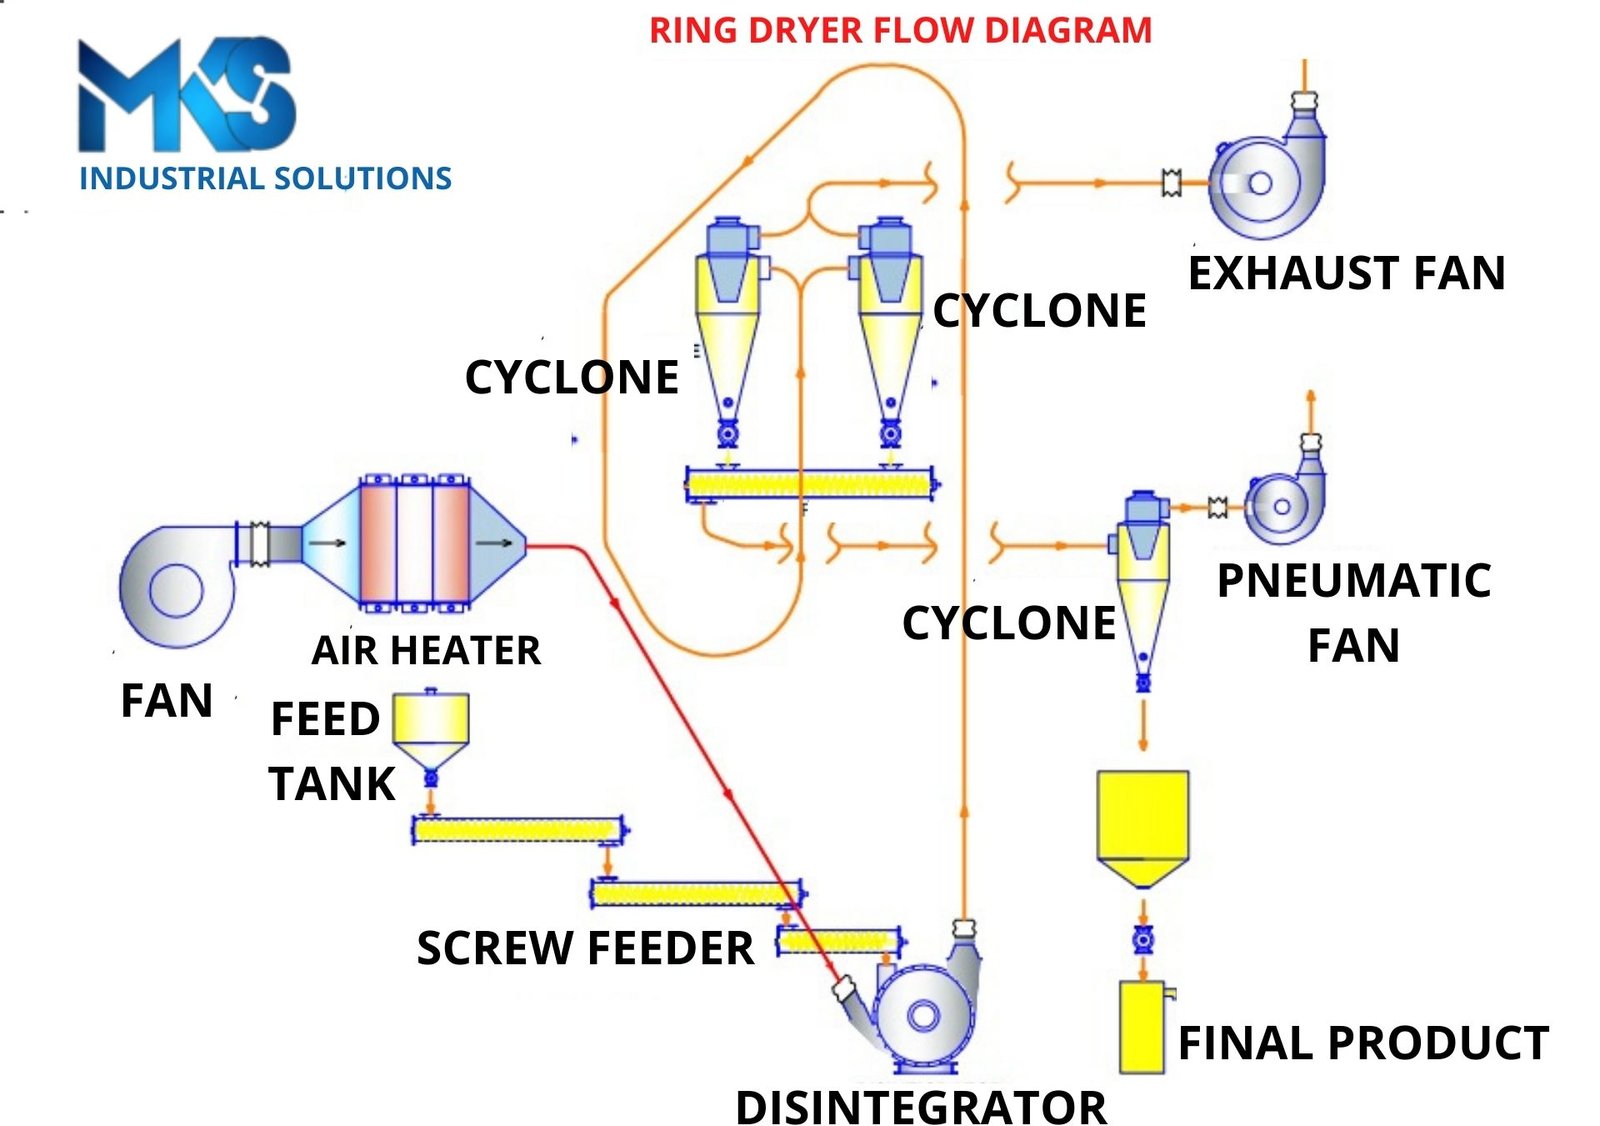 MKS Ring Dryer Flow Diagram